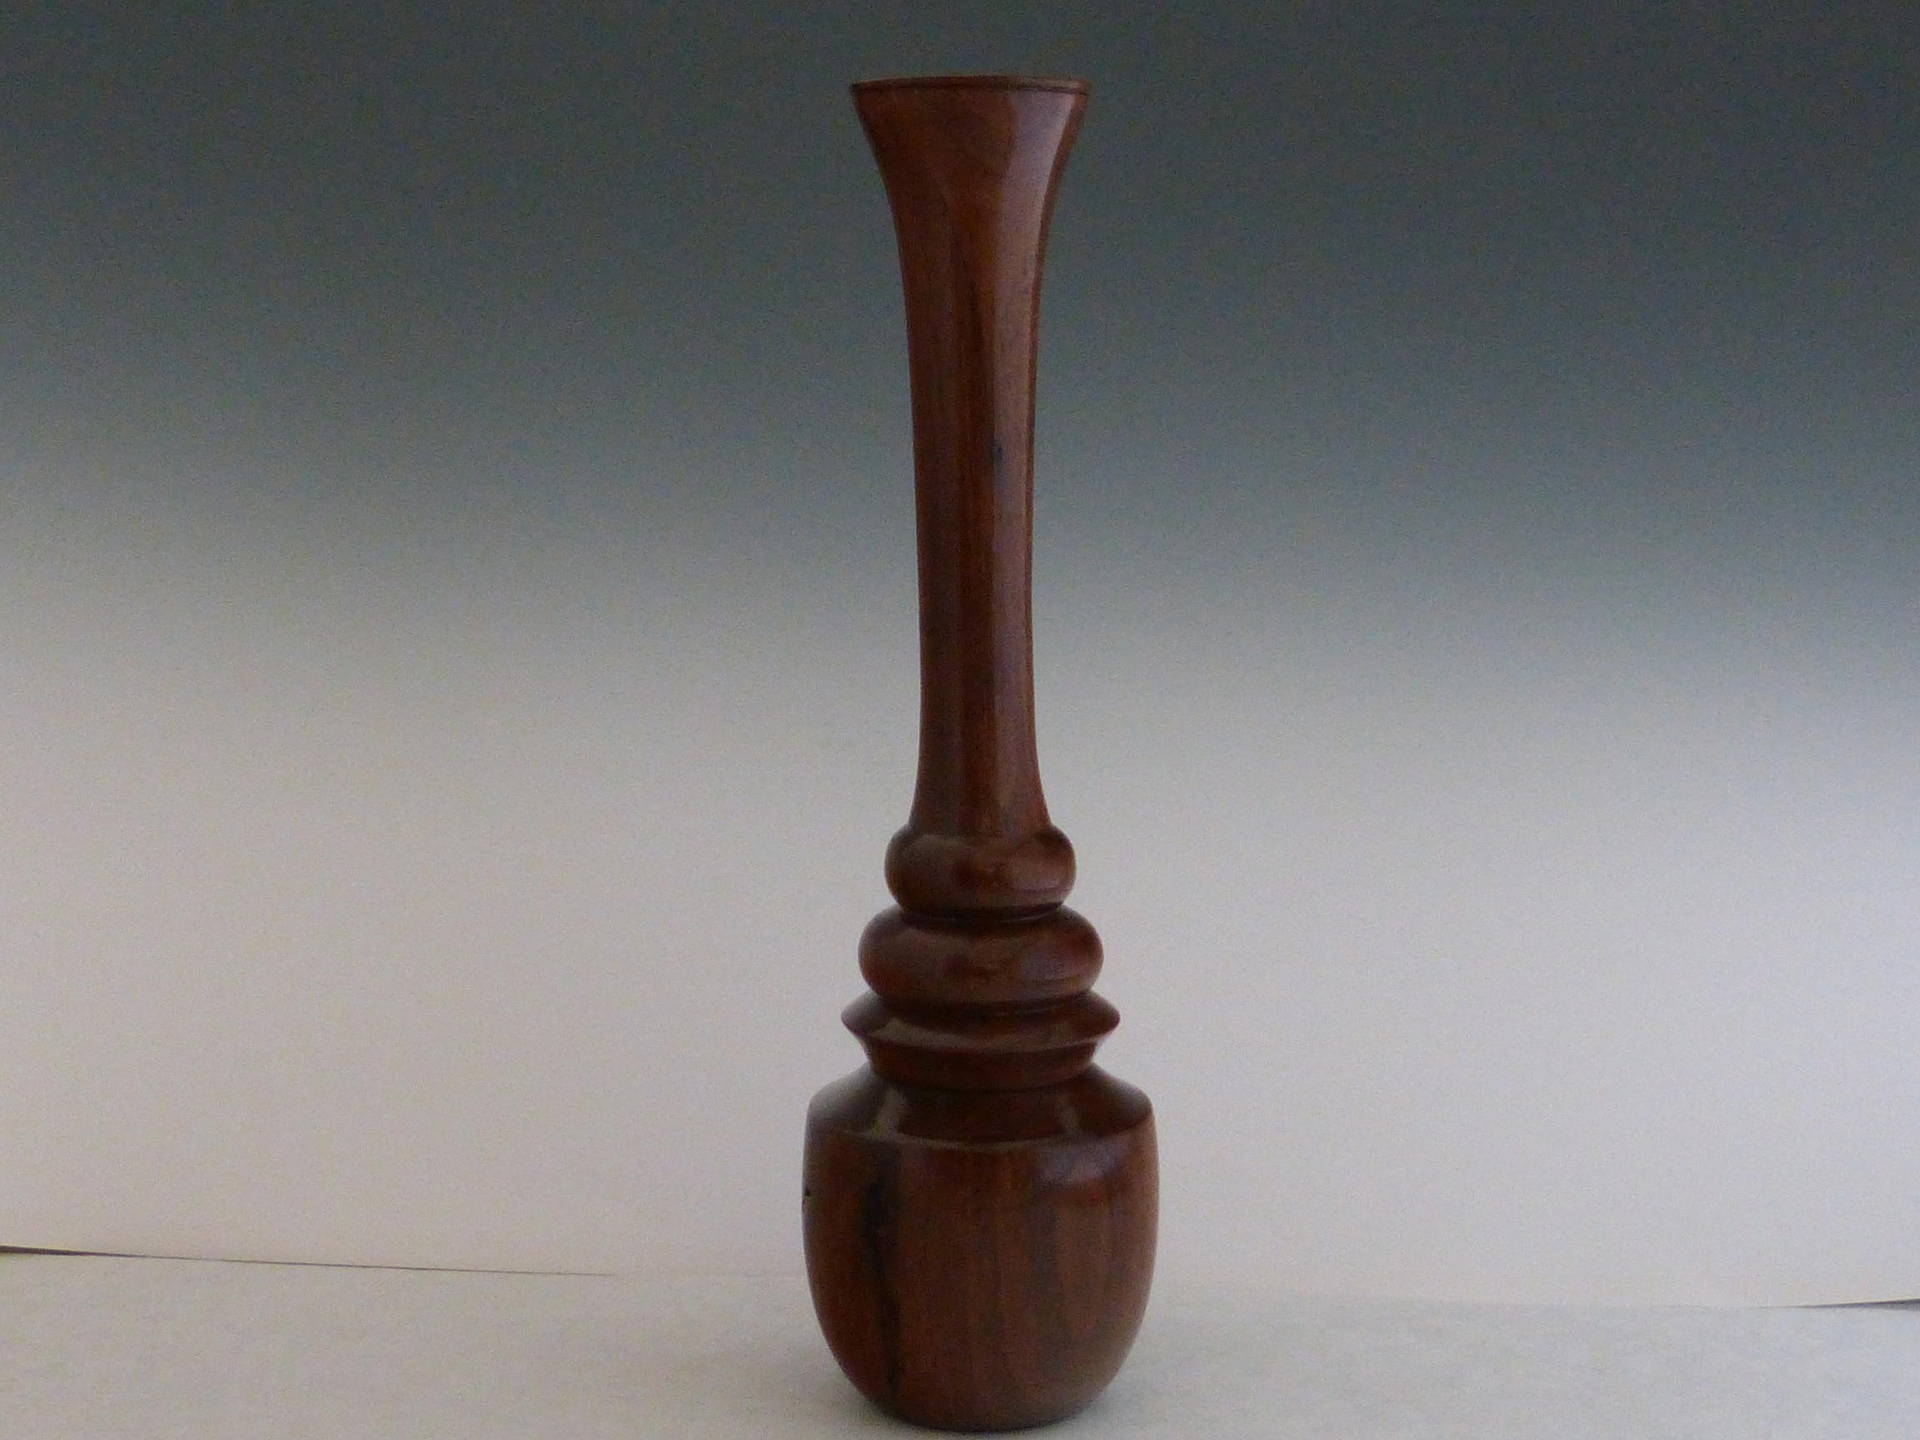 Black Walnut vase/weed pot